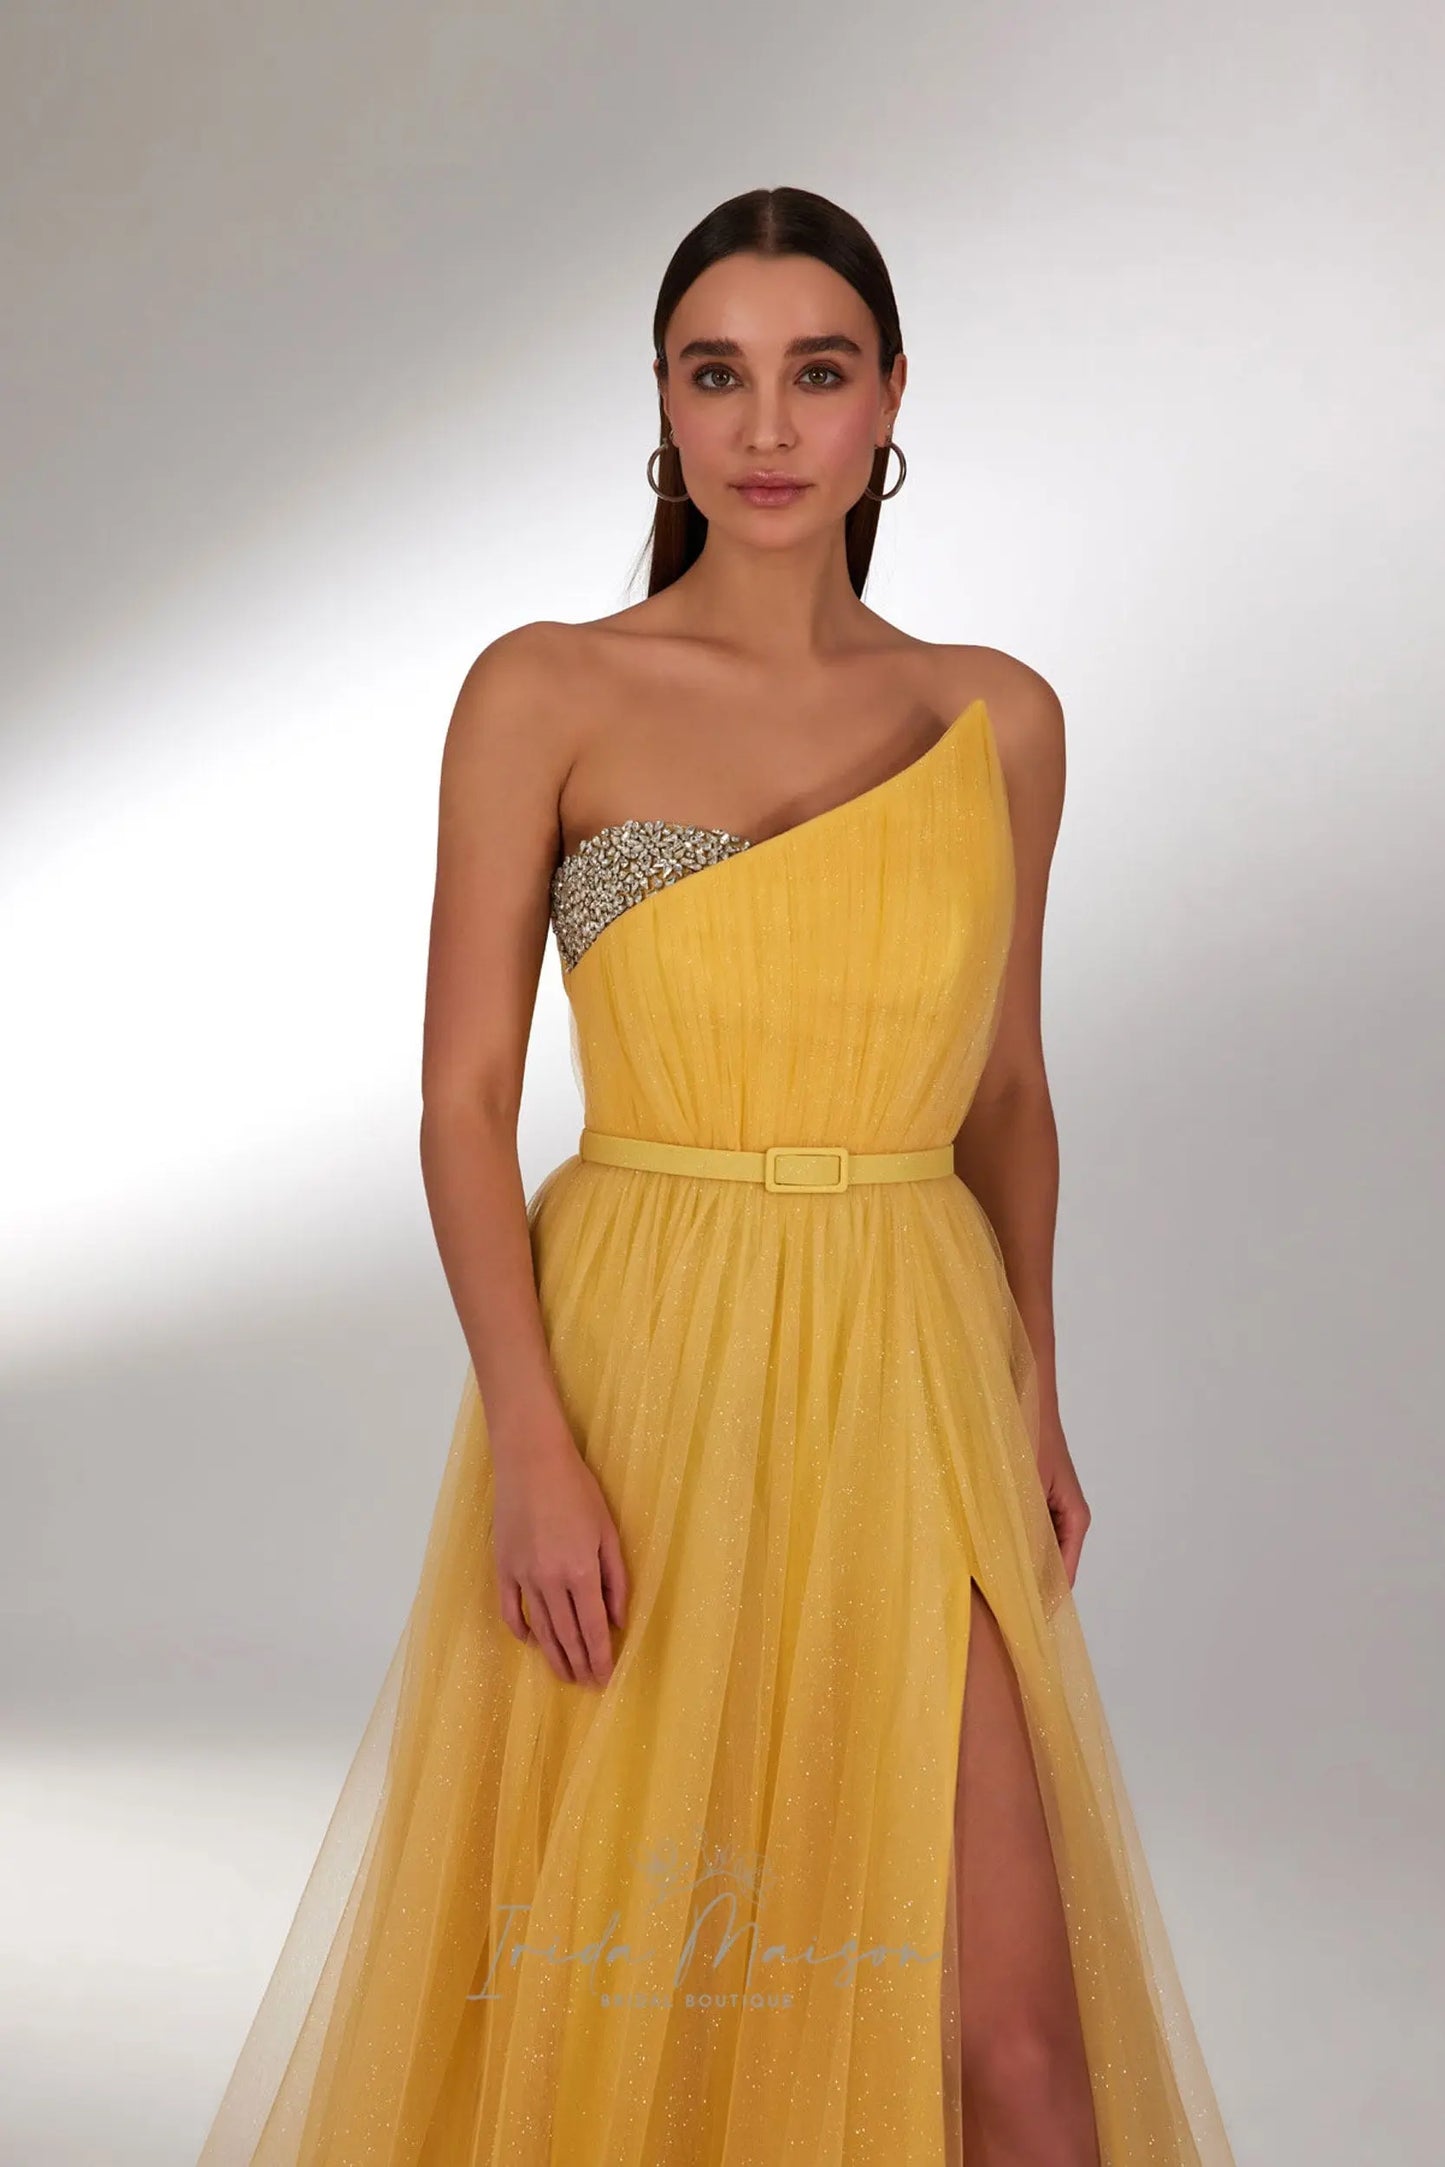 Unique Light sparkling tulle long Prom dress, Cocktail Dress, long Dress, Red Carpet Dress, Party Dress, Special Occasion Dress, Event Dress